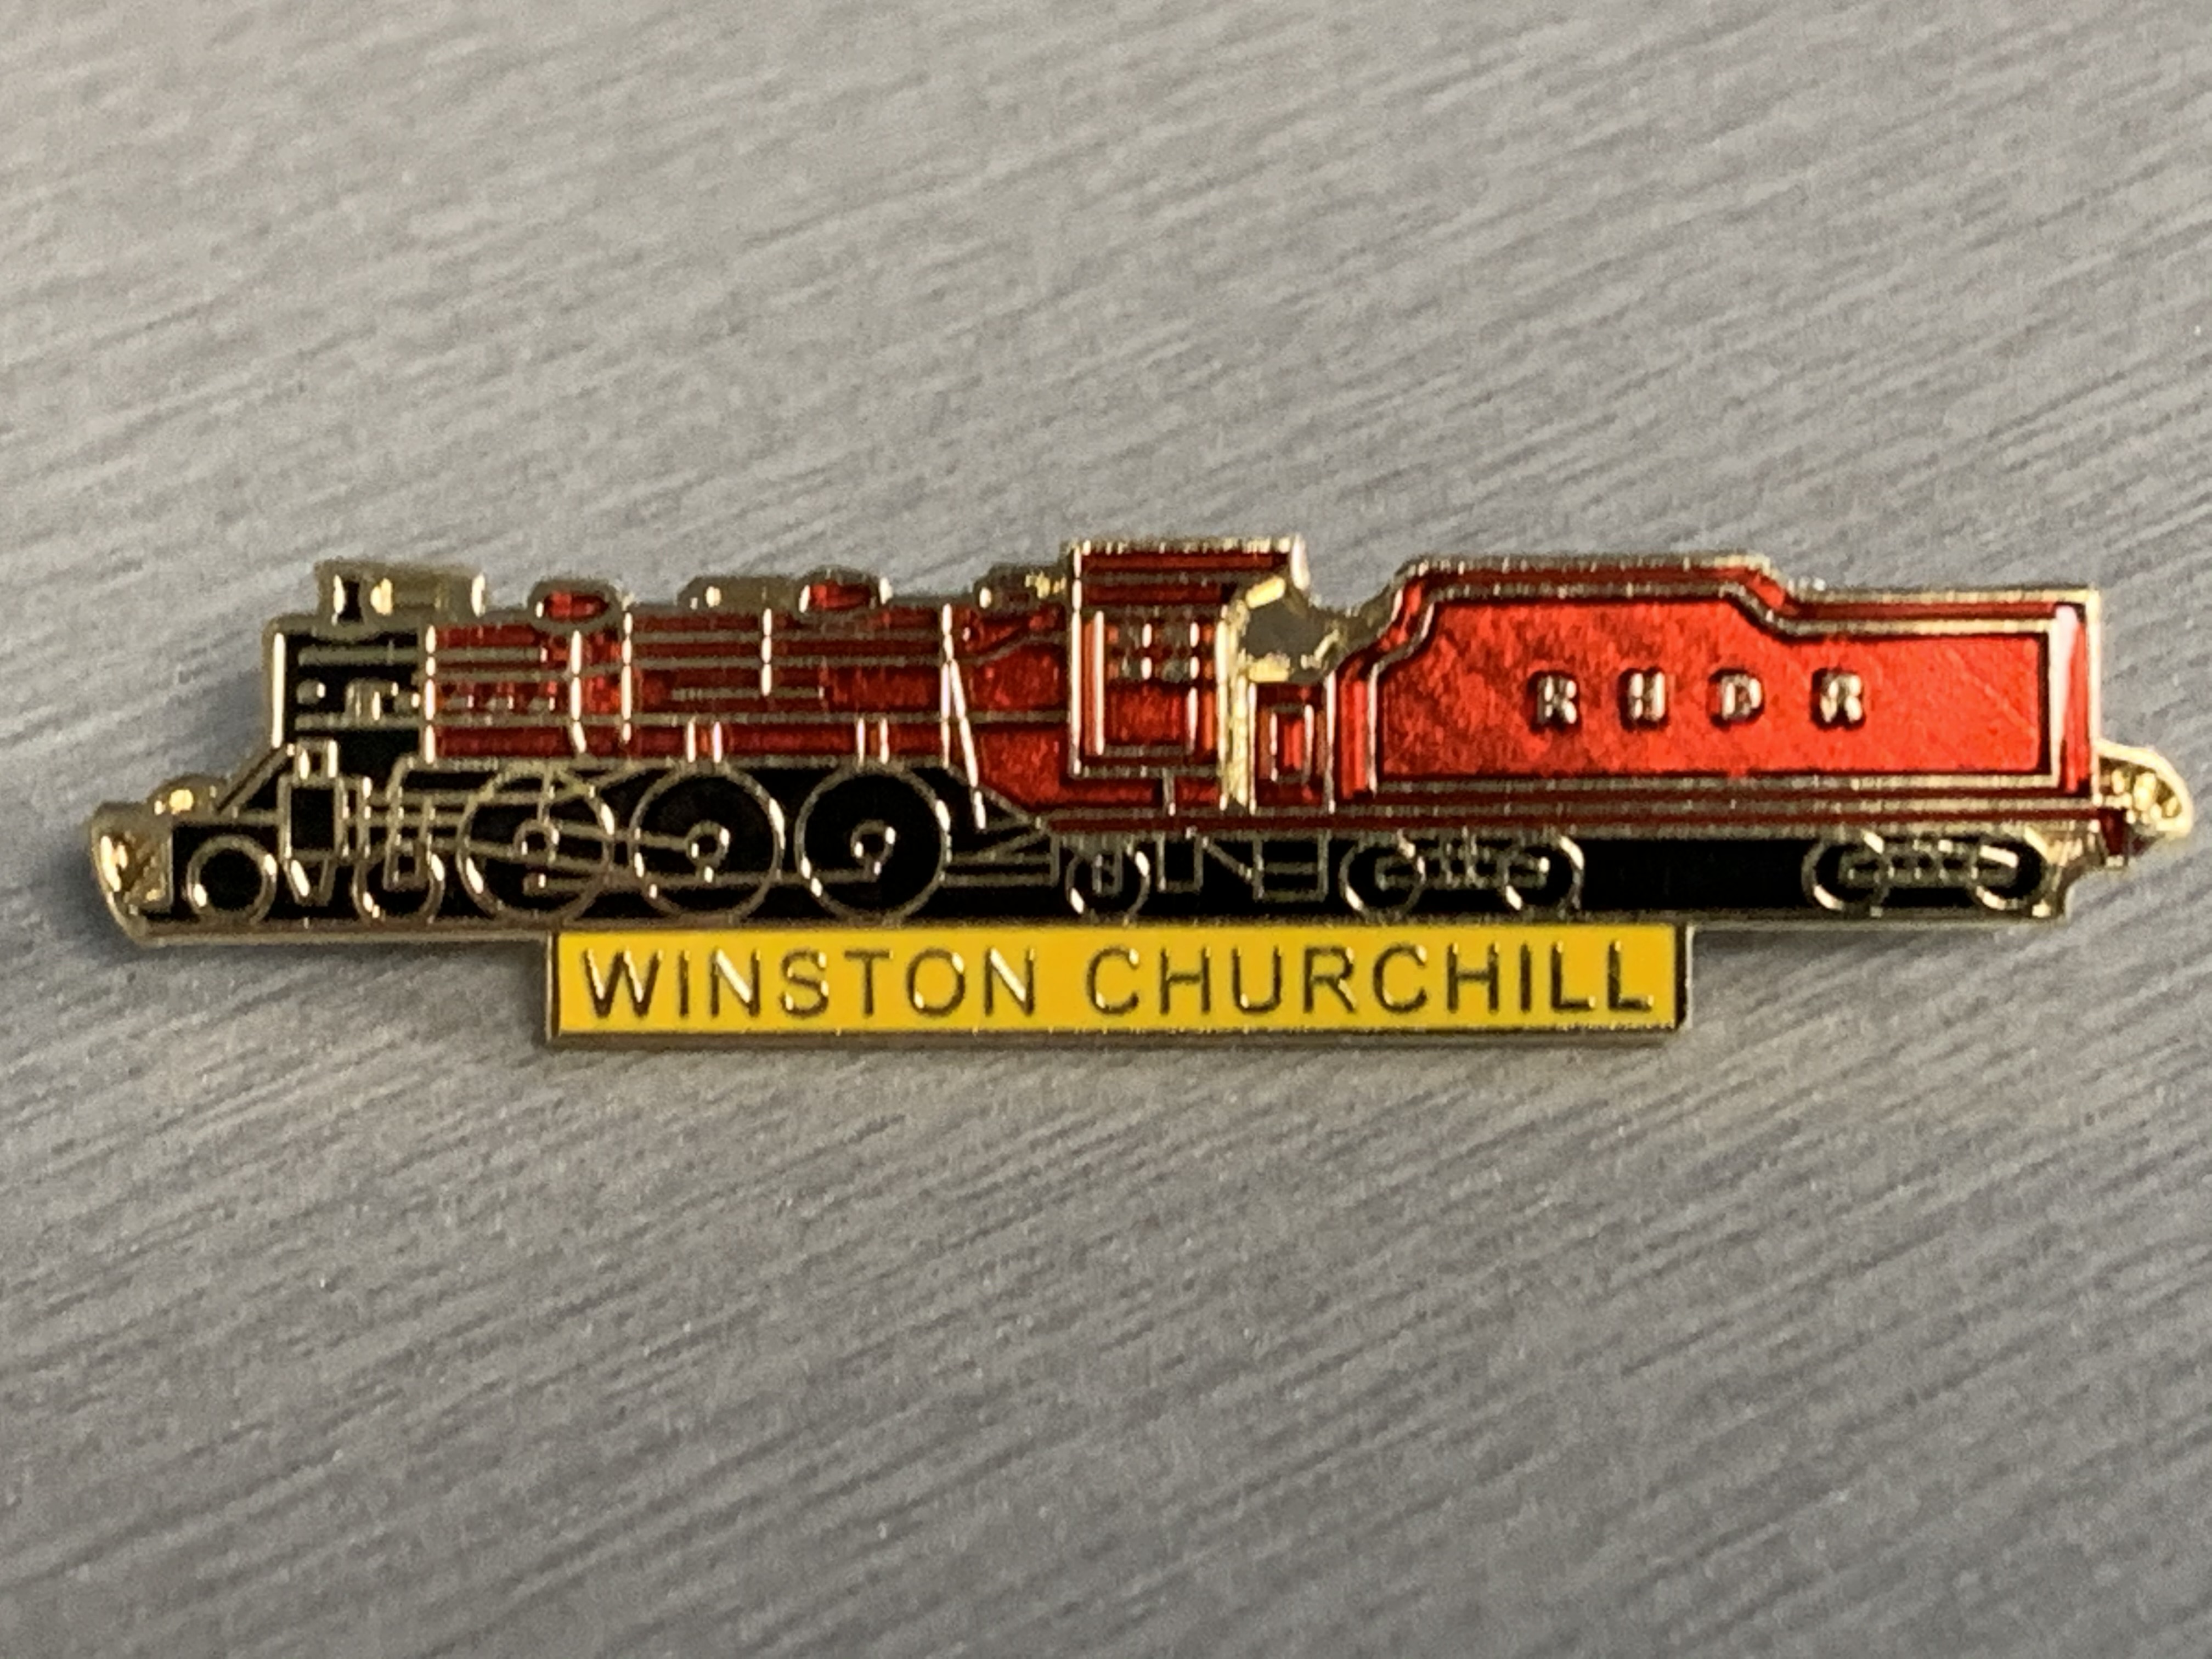 Winston Churchill Locomotive Badge